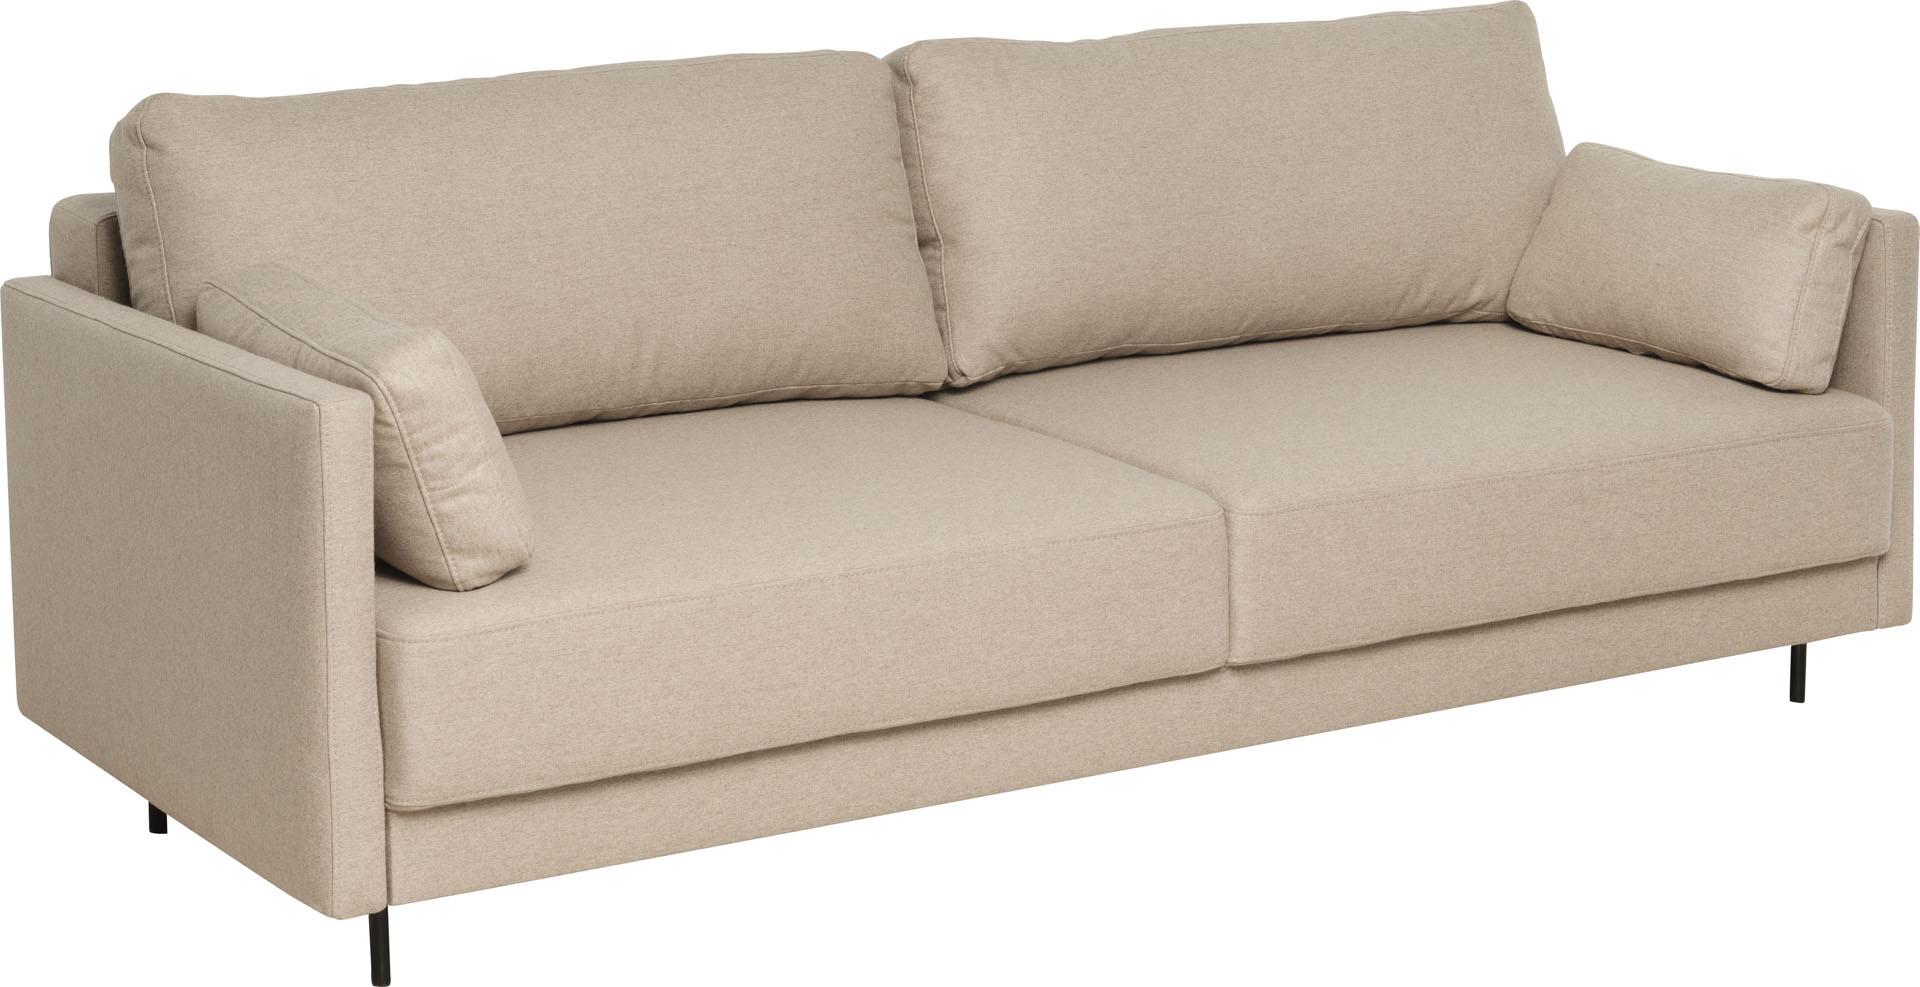 Estar 3-seater sofa with sleeping function